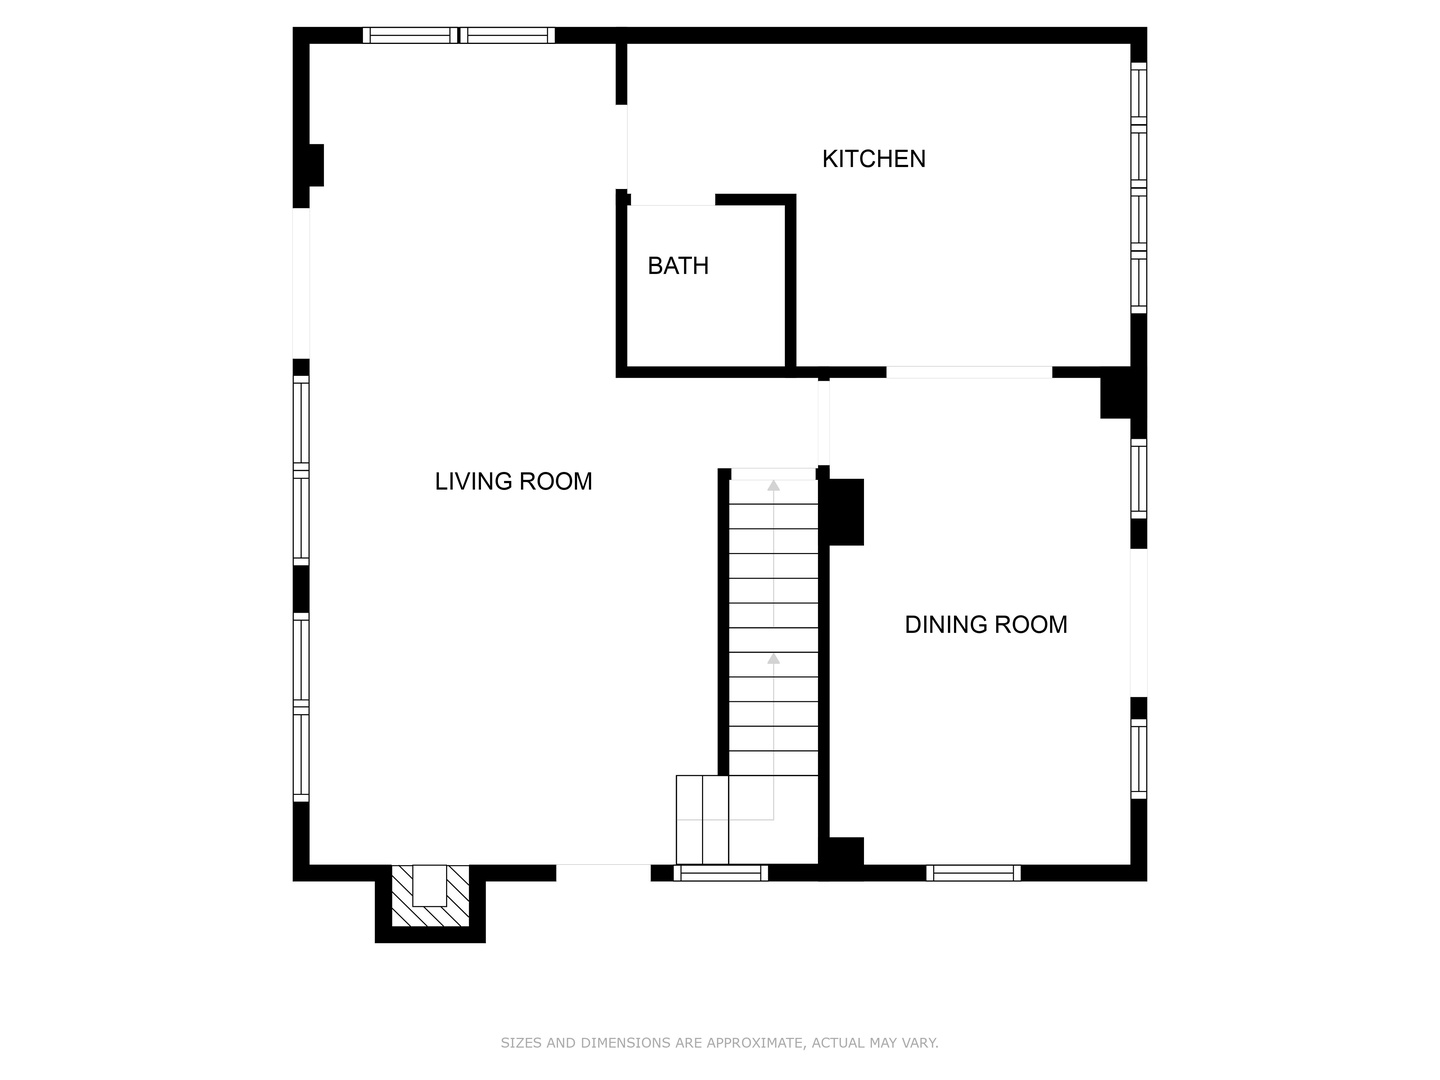 2nd floor layout